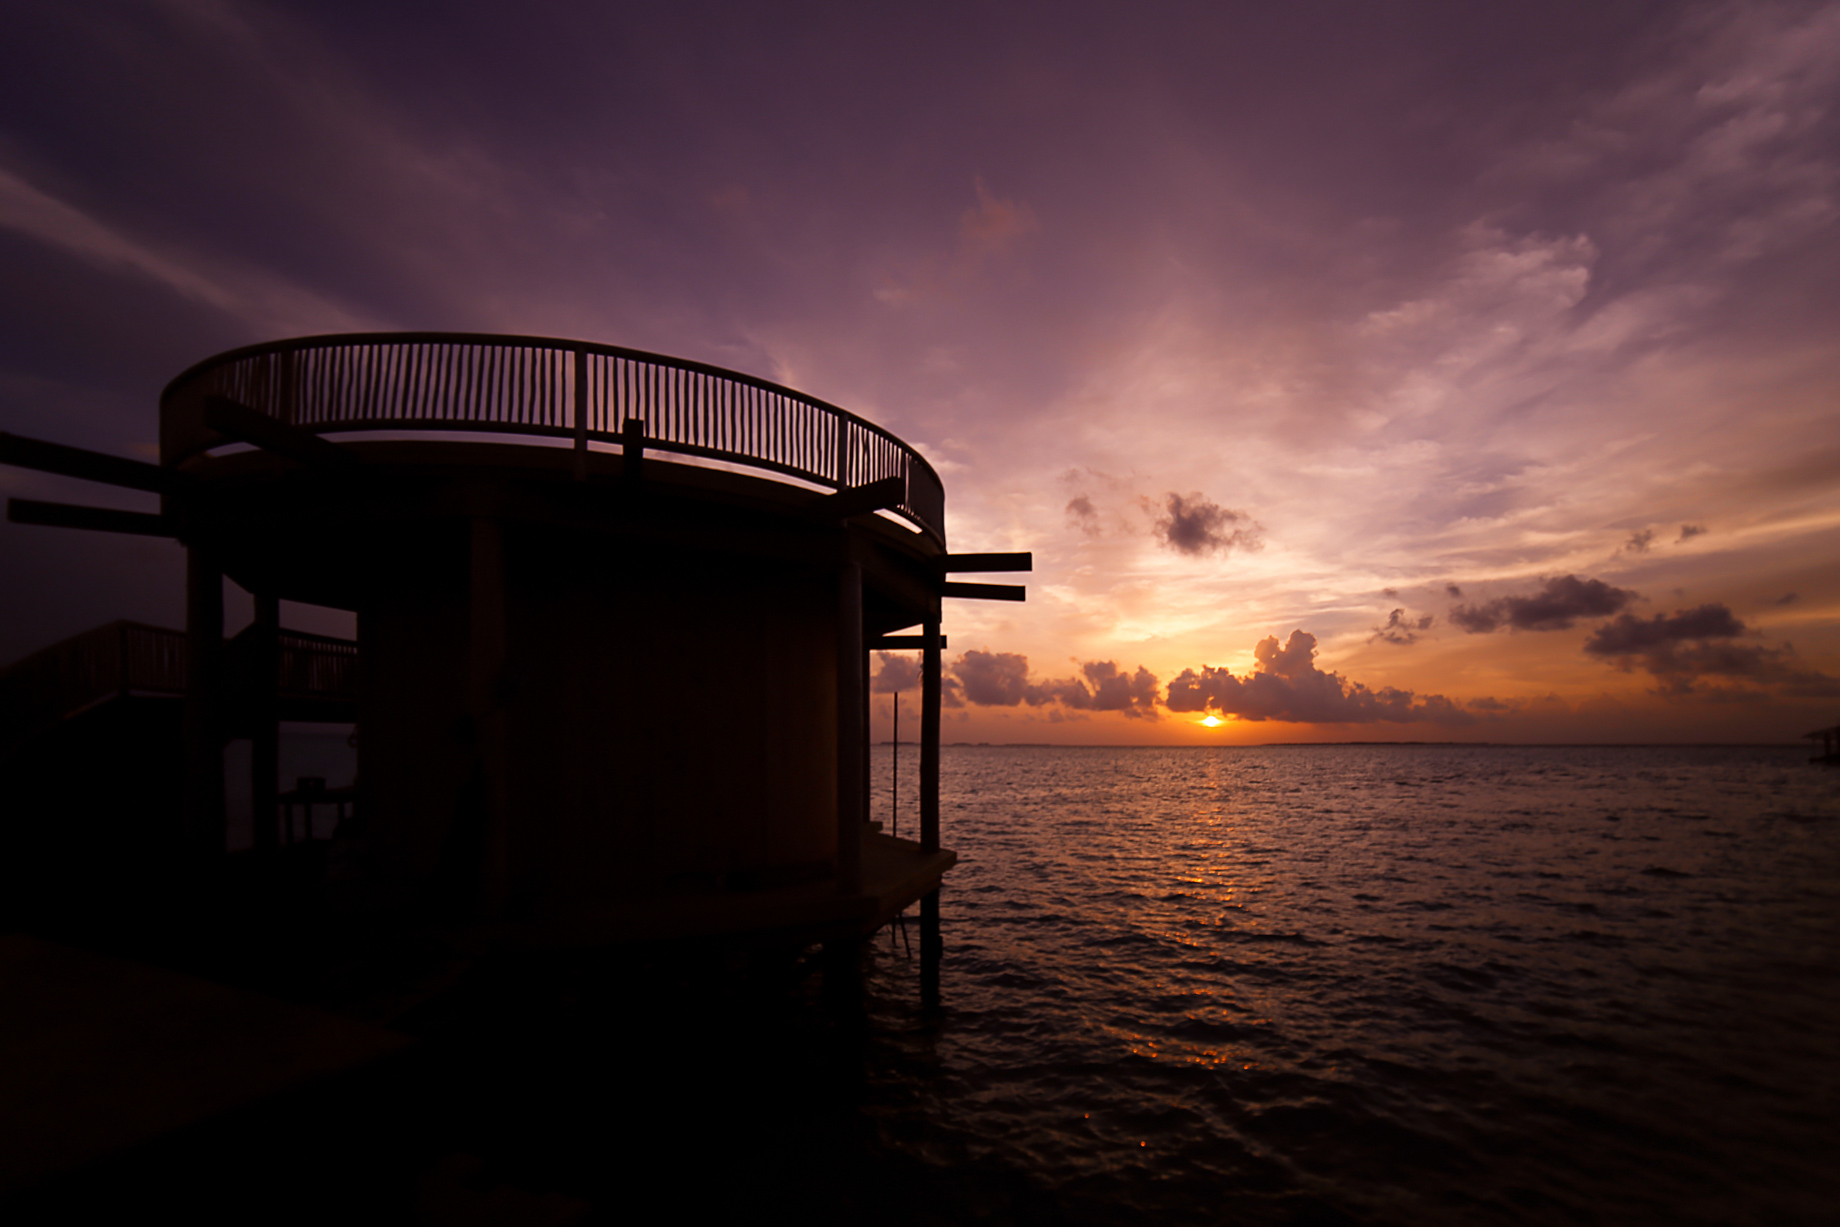 Soneva Jani Resort – Noonu Atoll, Medhufaru, Maldives – So Starstruck Overwater Dining Sunset